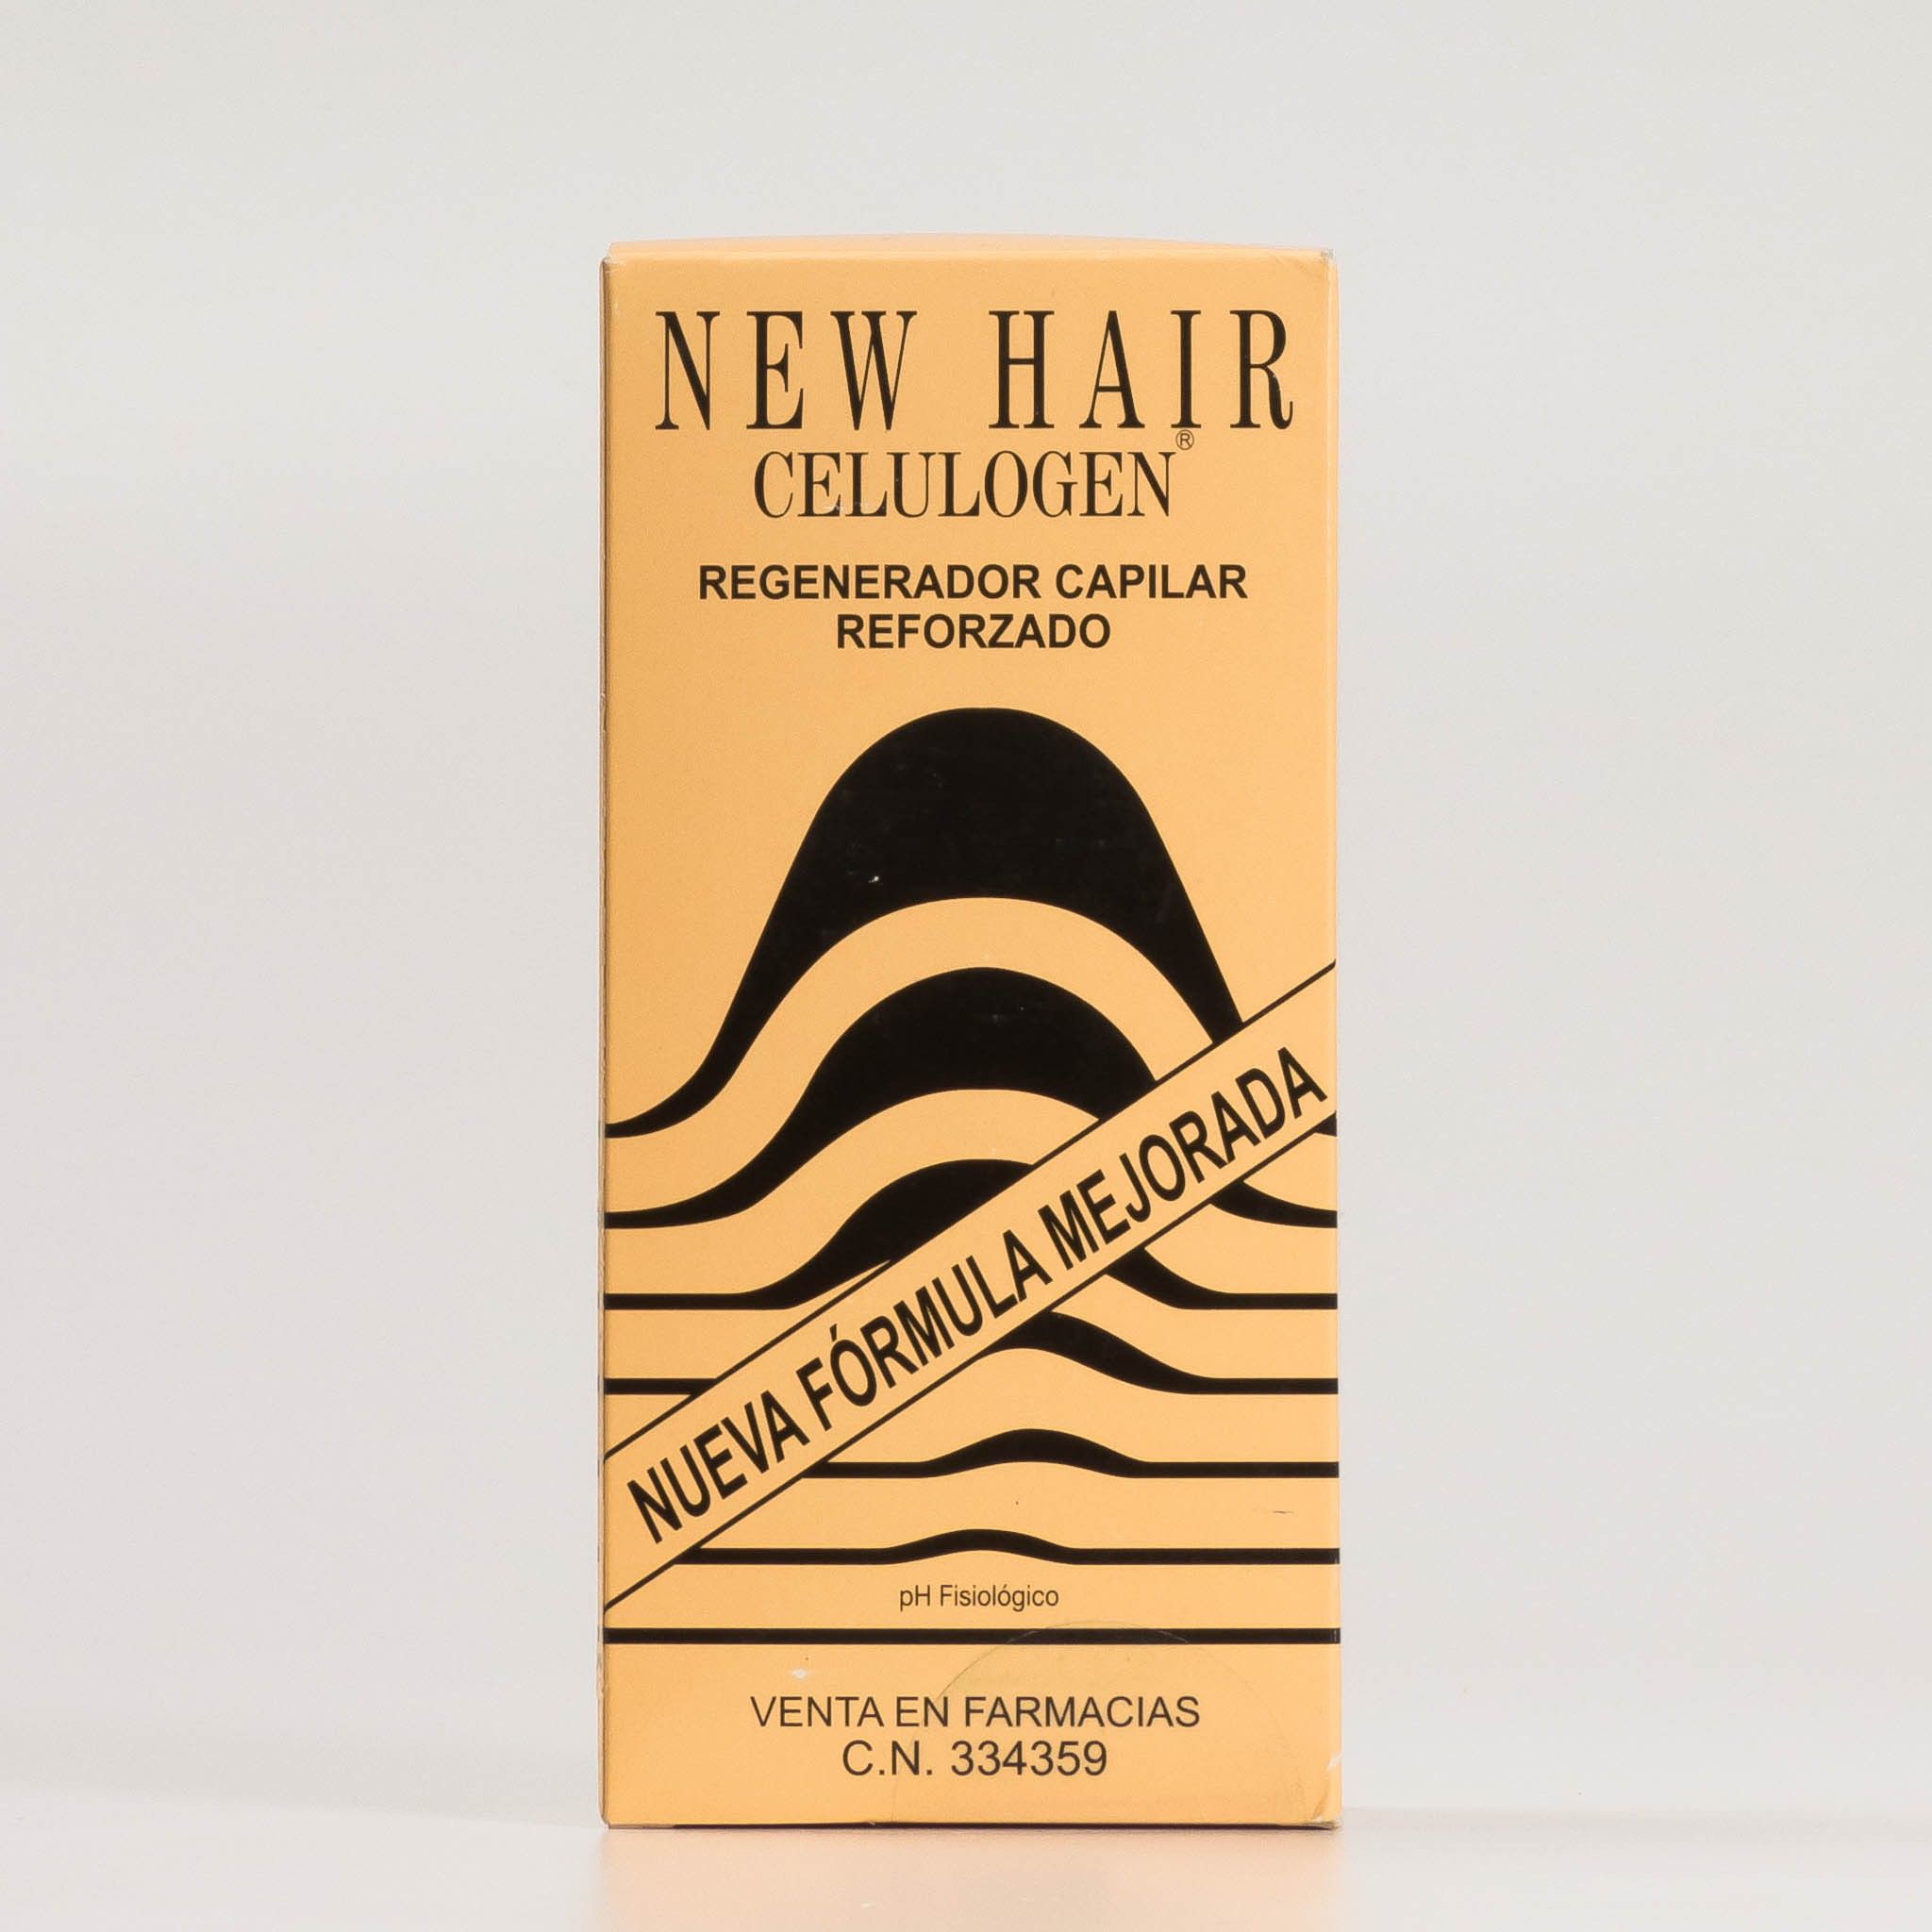 Celulogen New Hair Regenerador Capilar, 250ml